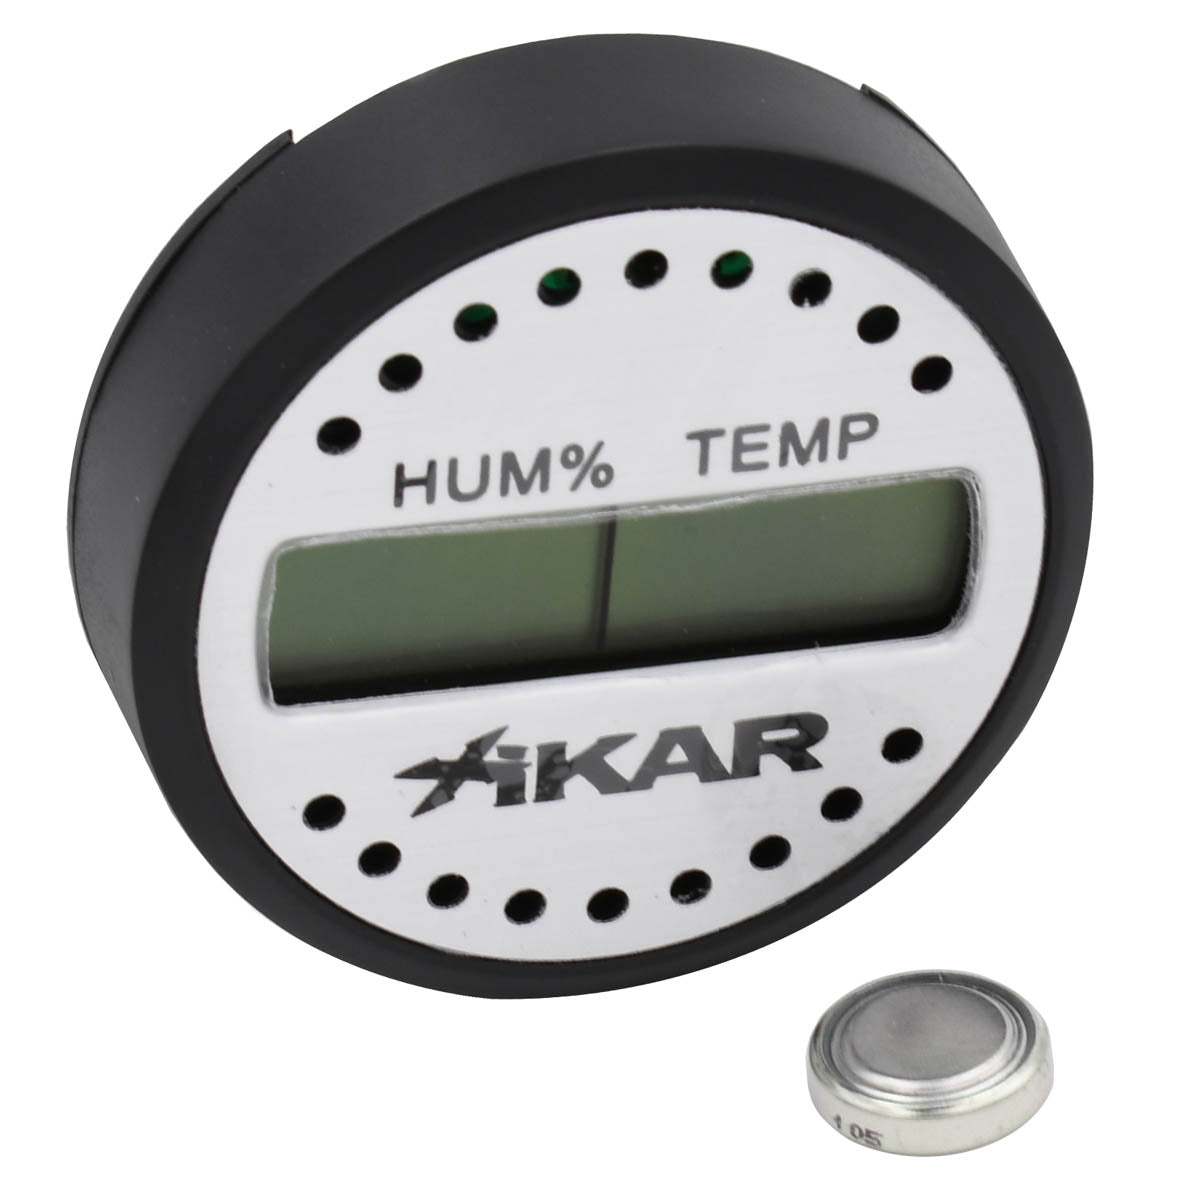 XIKAR 832Xi Digital Cigar Humidor Hygrometer Thermometer Round Black  PuroTemp